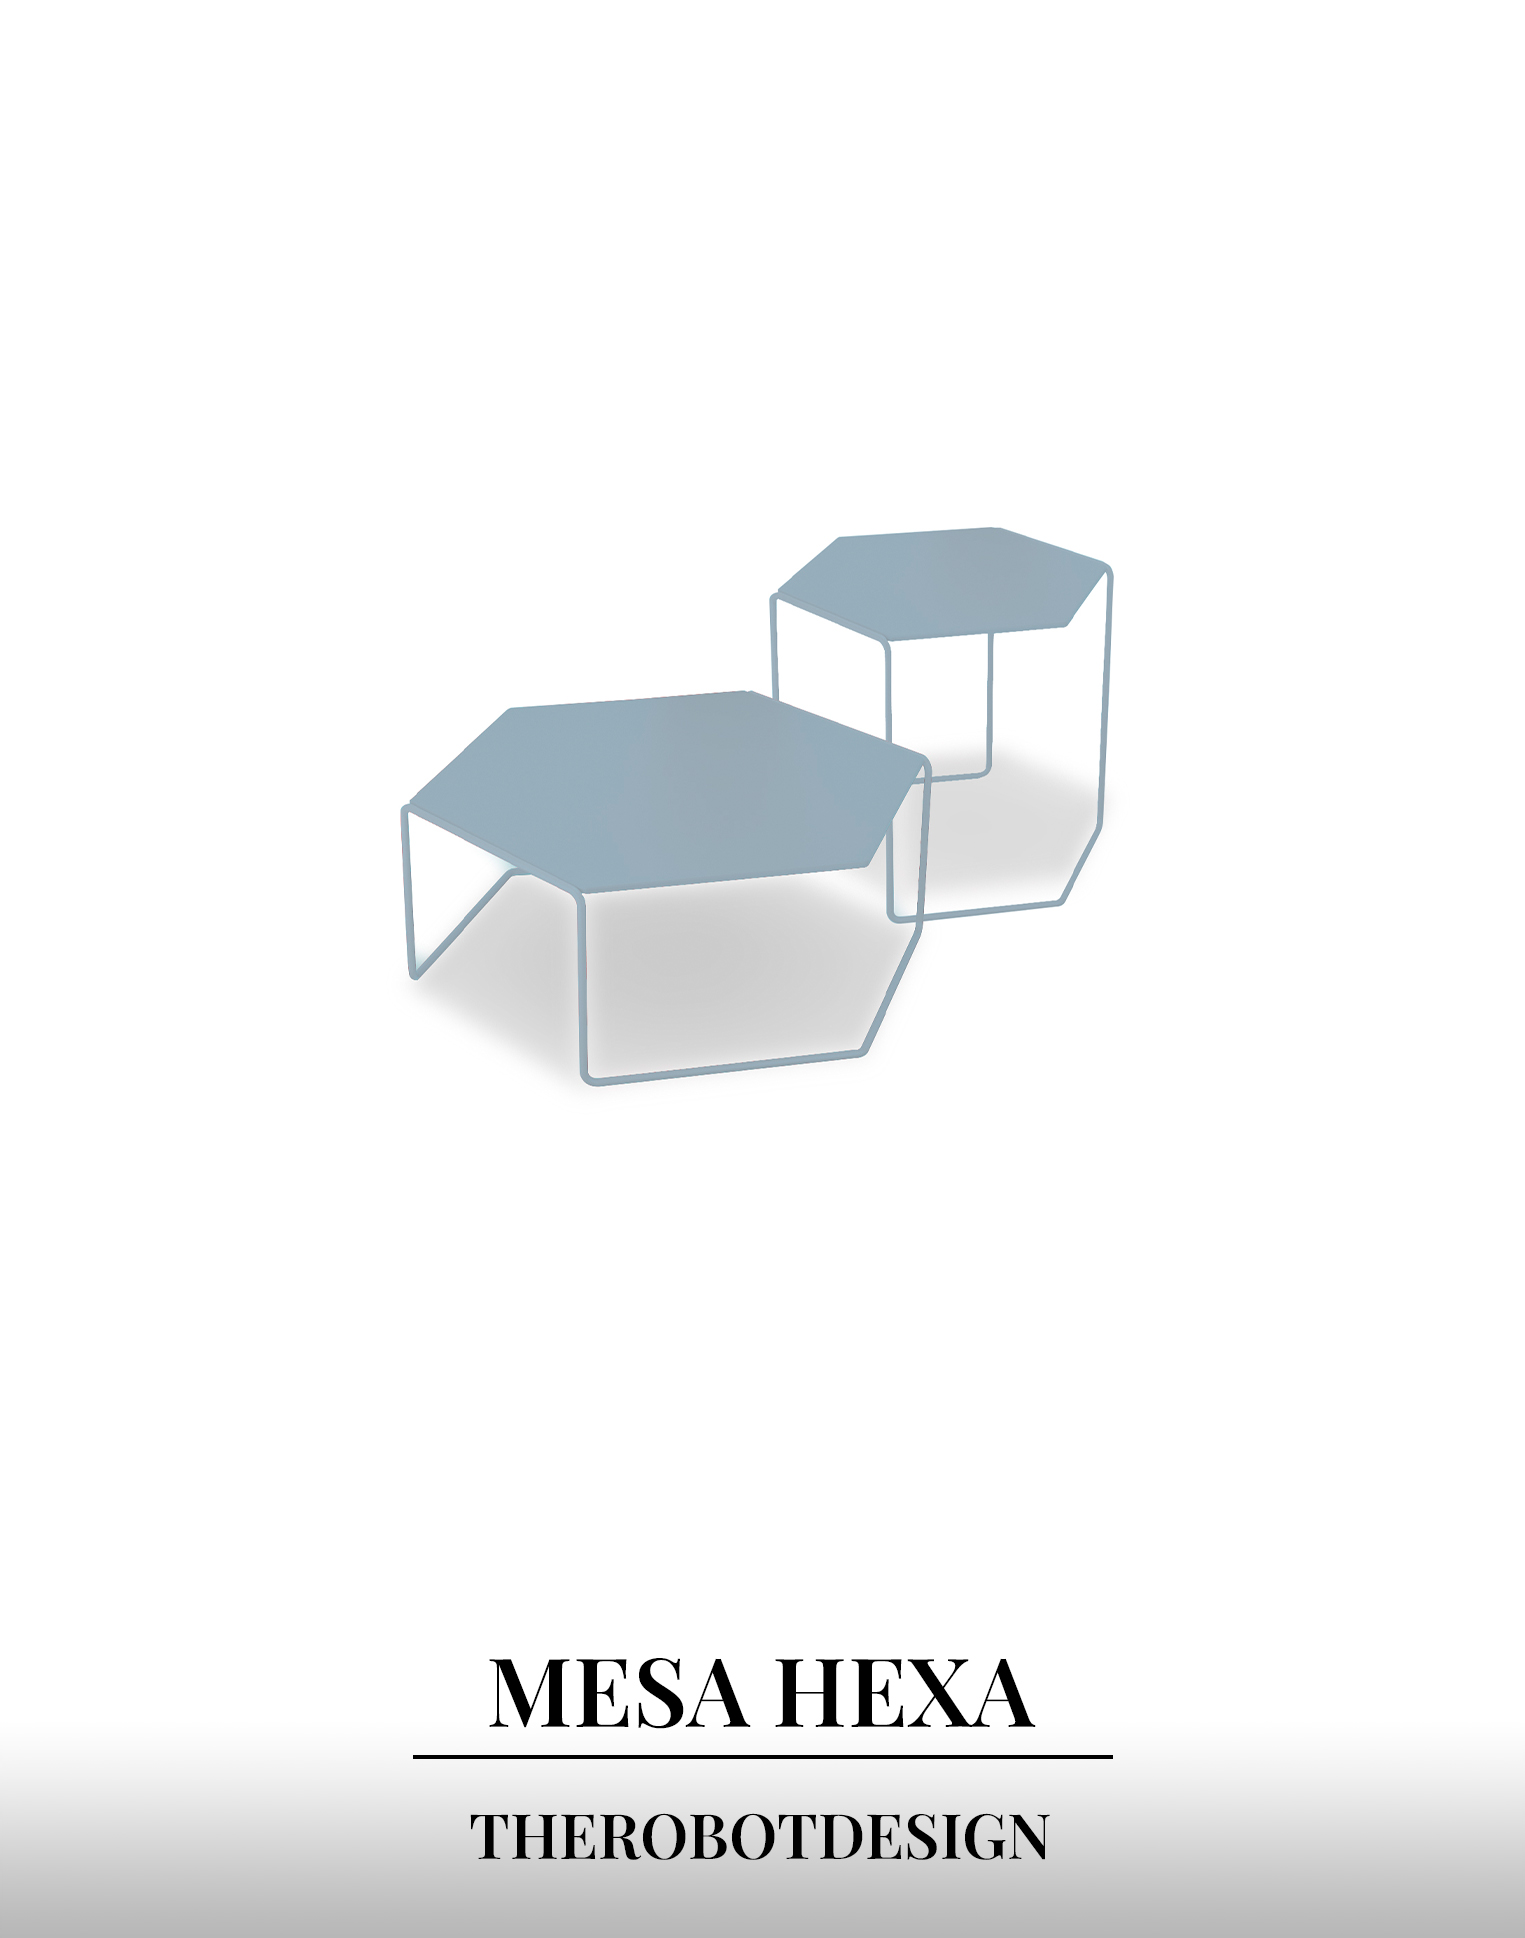 Hexa Mesa